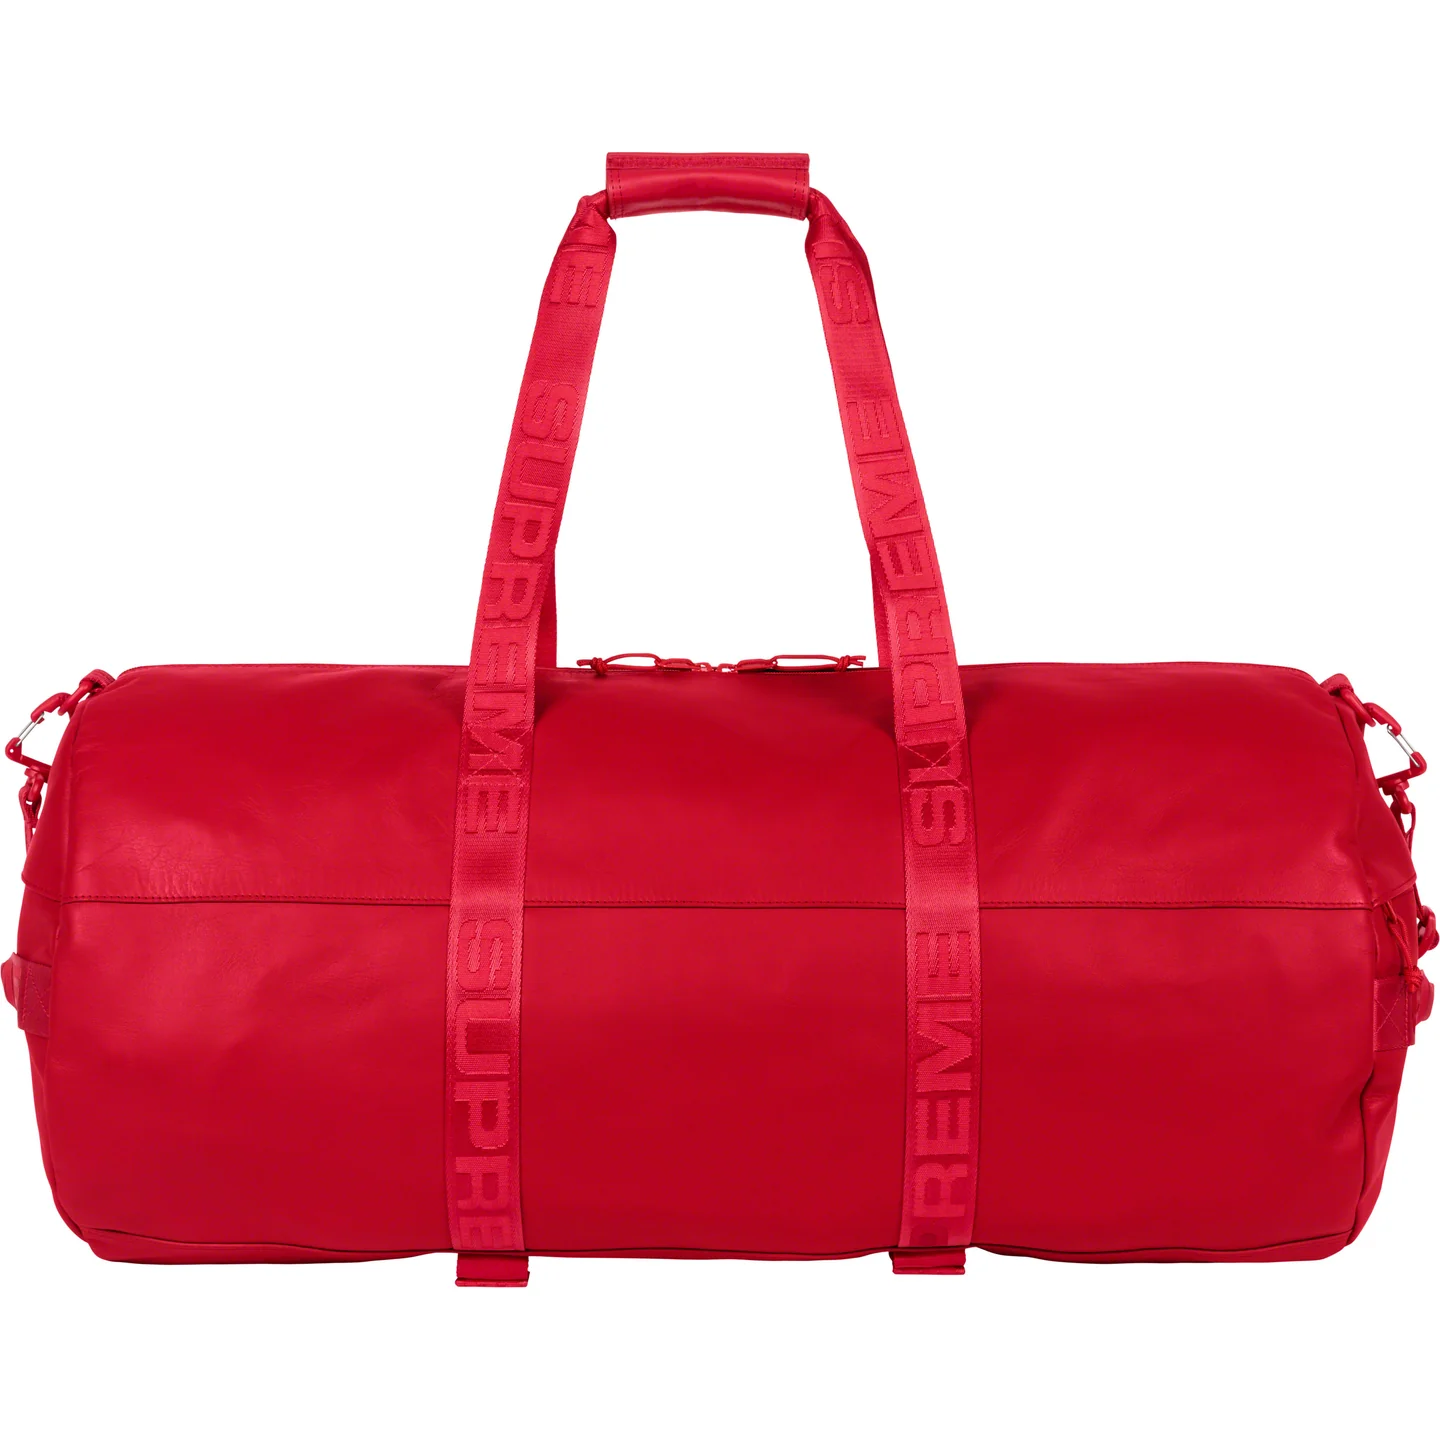 Supreme Leather Large Duffle Bag